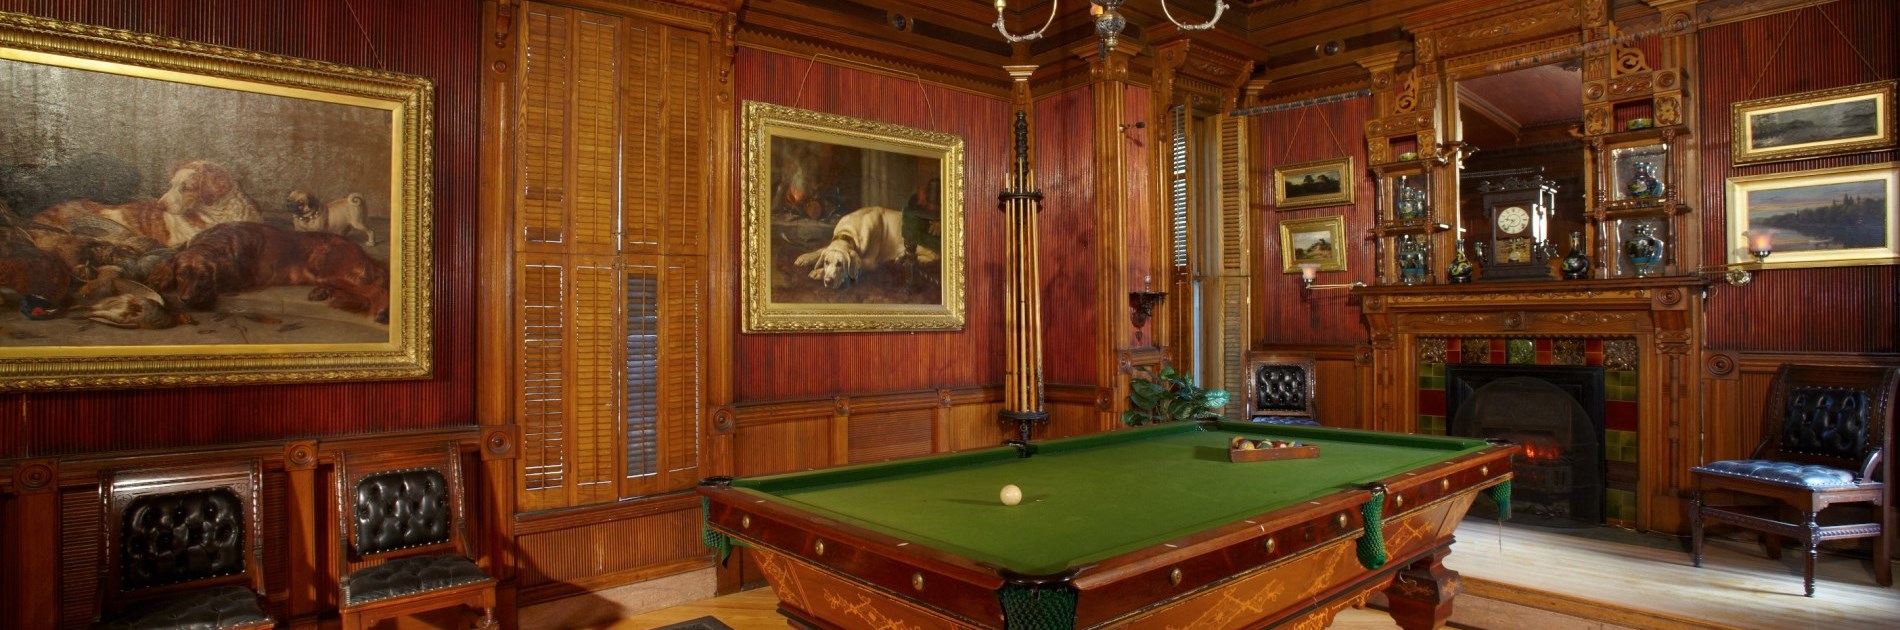 Glanmore National Historic Site Billiard Room